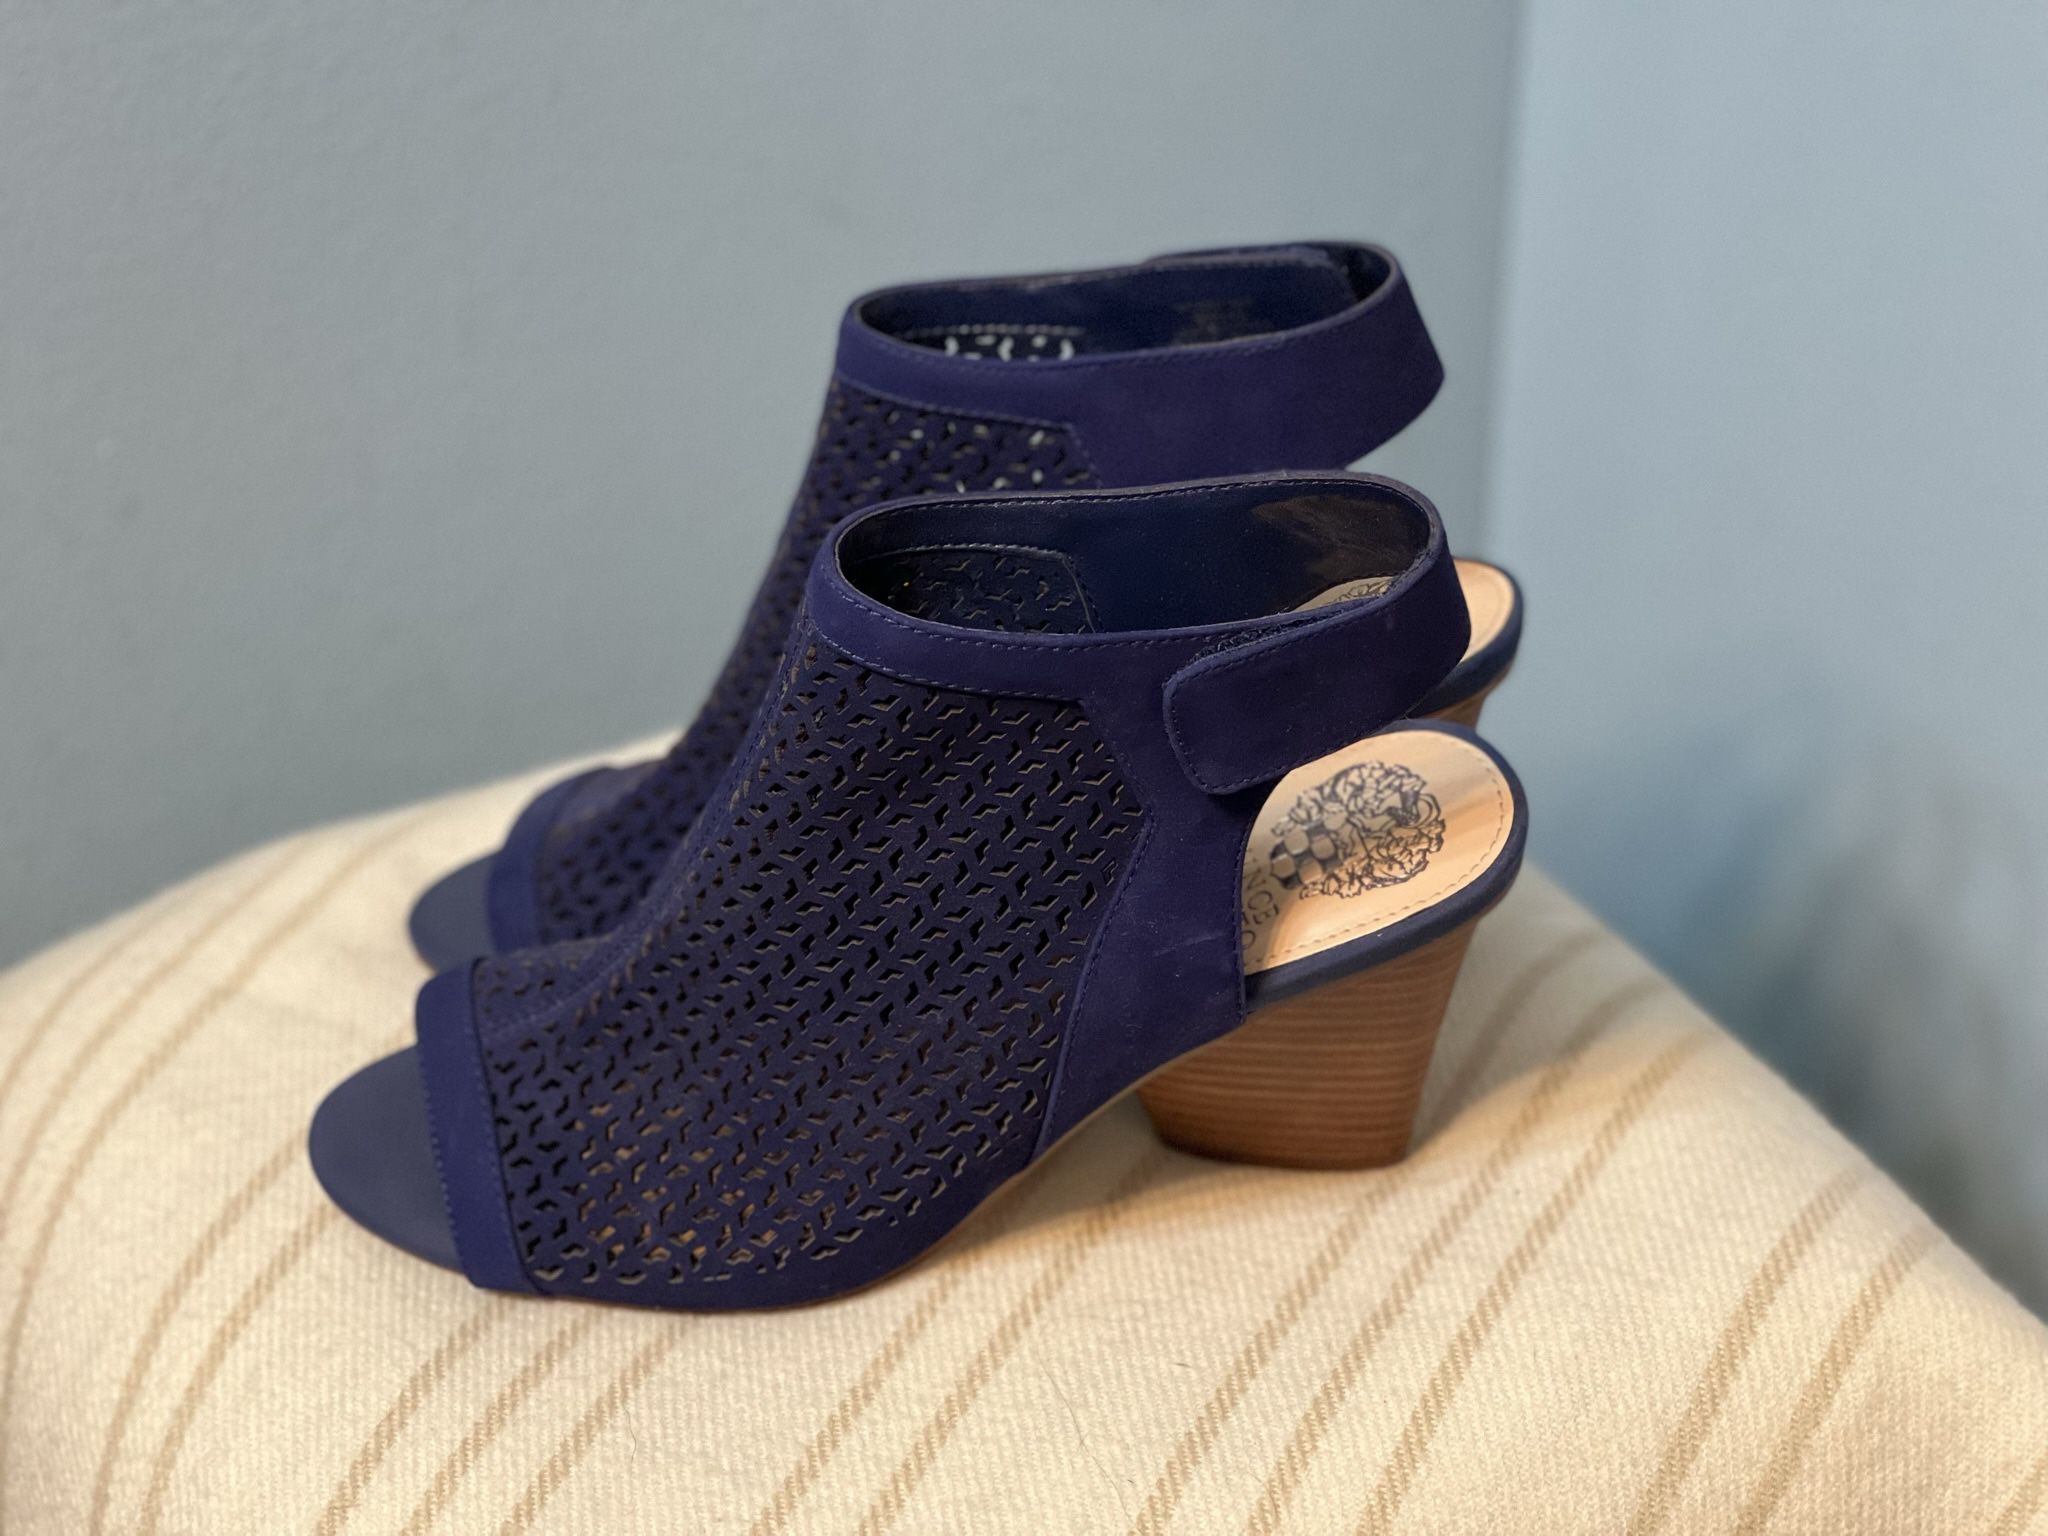 Women’s Heels - Vince Camuto - Size 9 - Blue